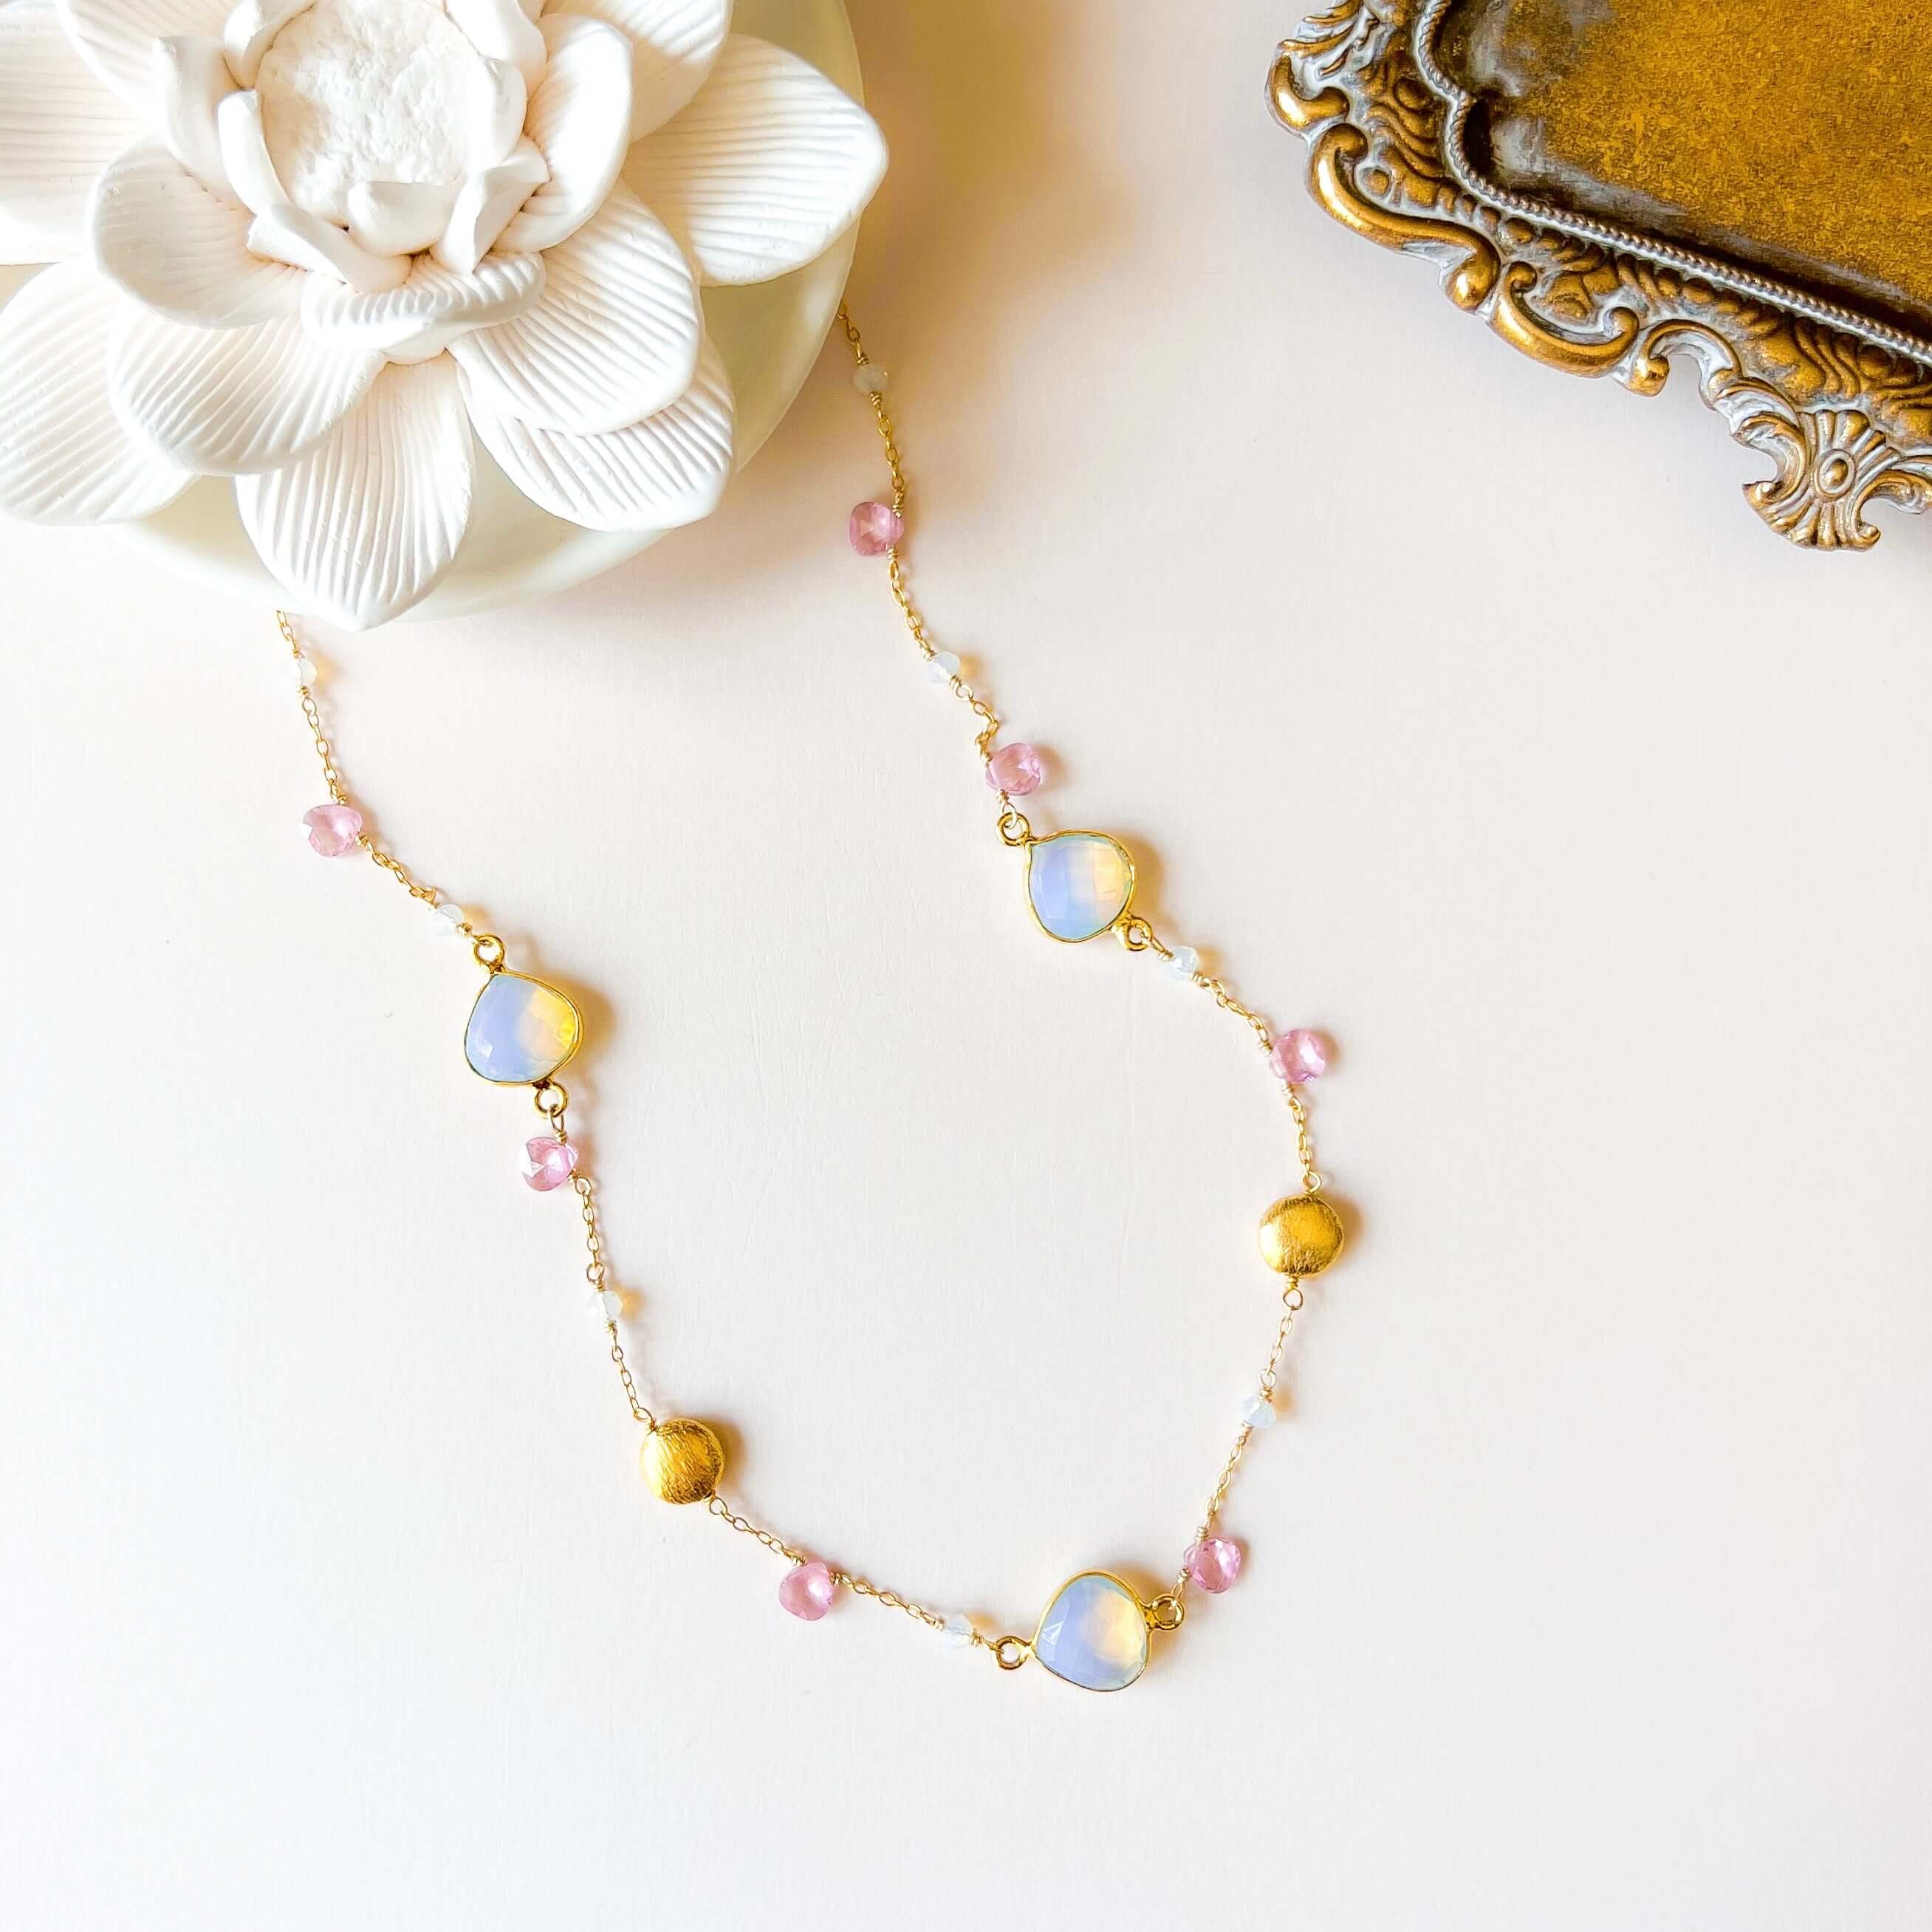 Opal Quartz Gold Bezel Chain, handcrafted with 14k gold plated fine Italian silver, opal quartz bezel gemstones, and pink tourmaline accent stones.